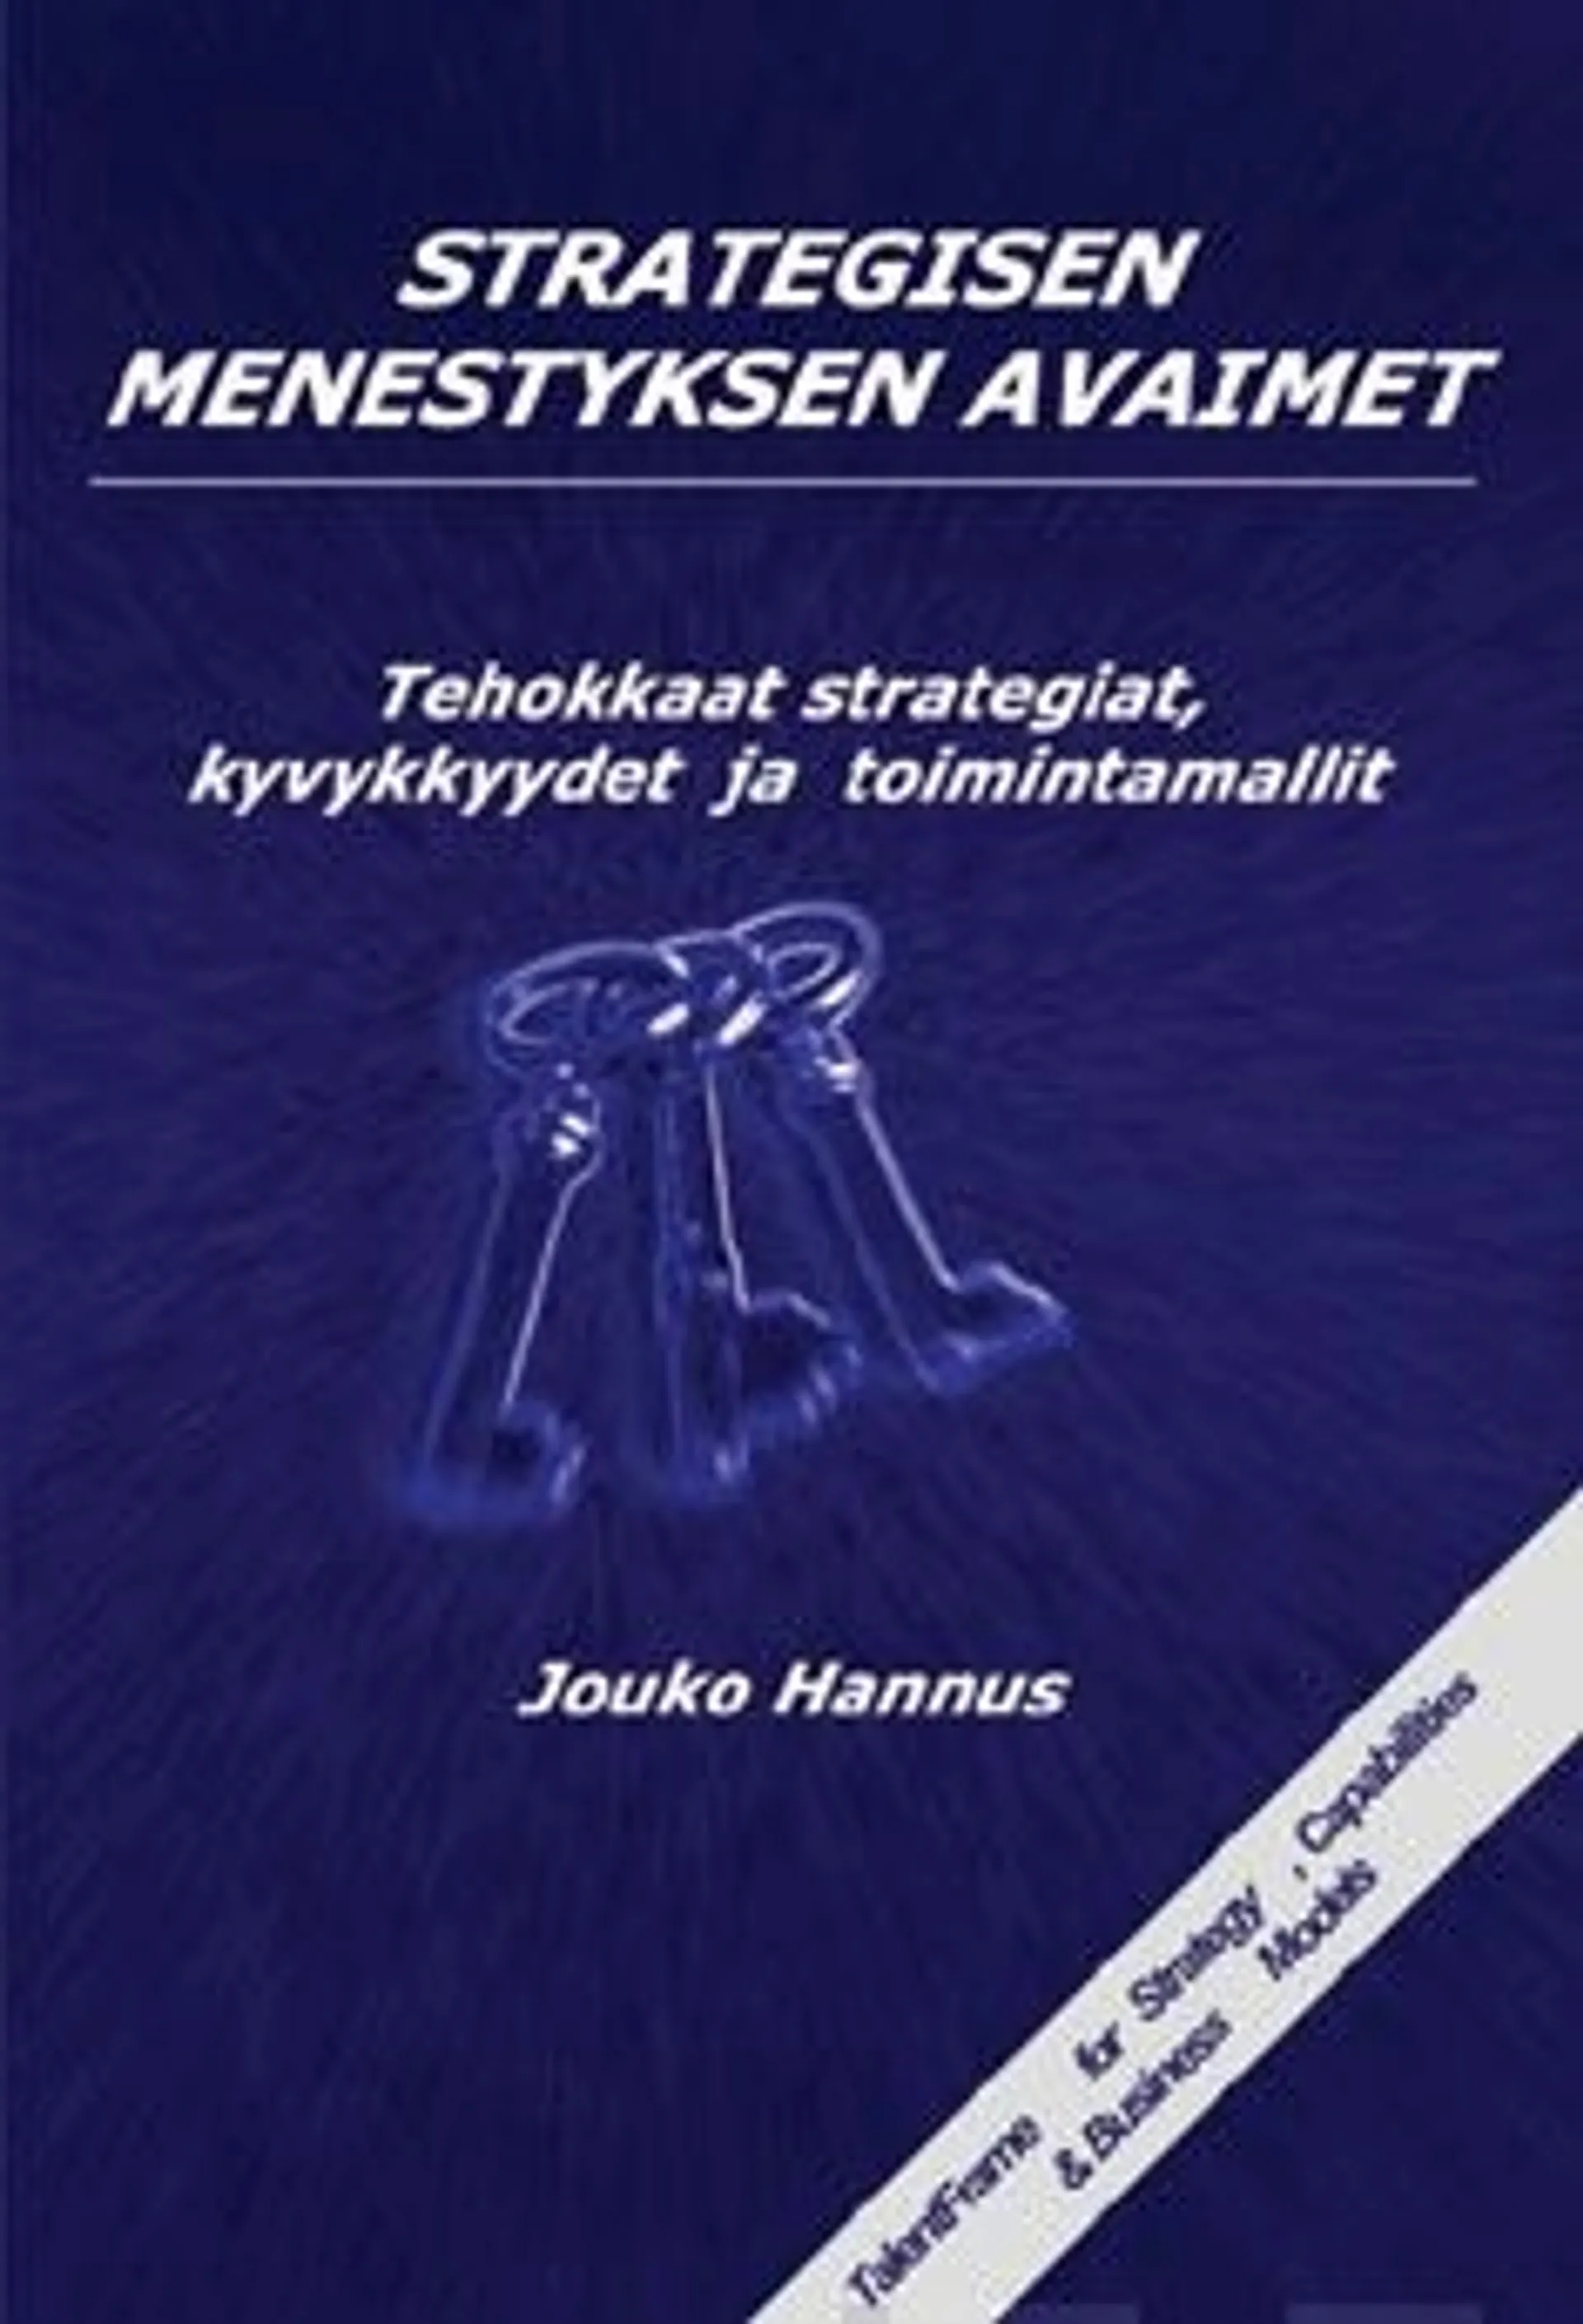 Hannus, Strategisen menestyksen avaimet